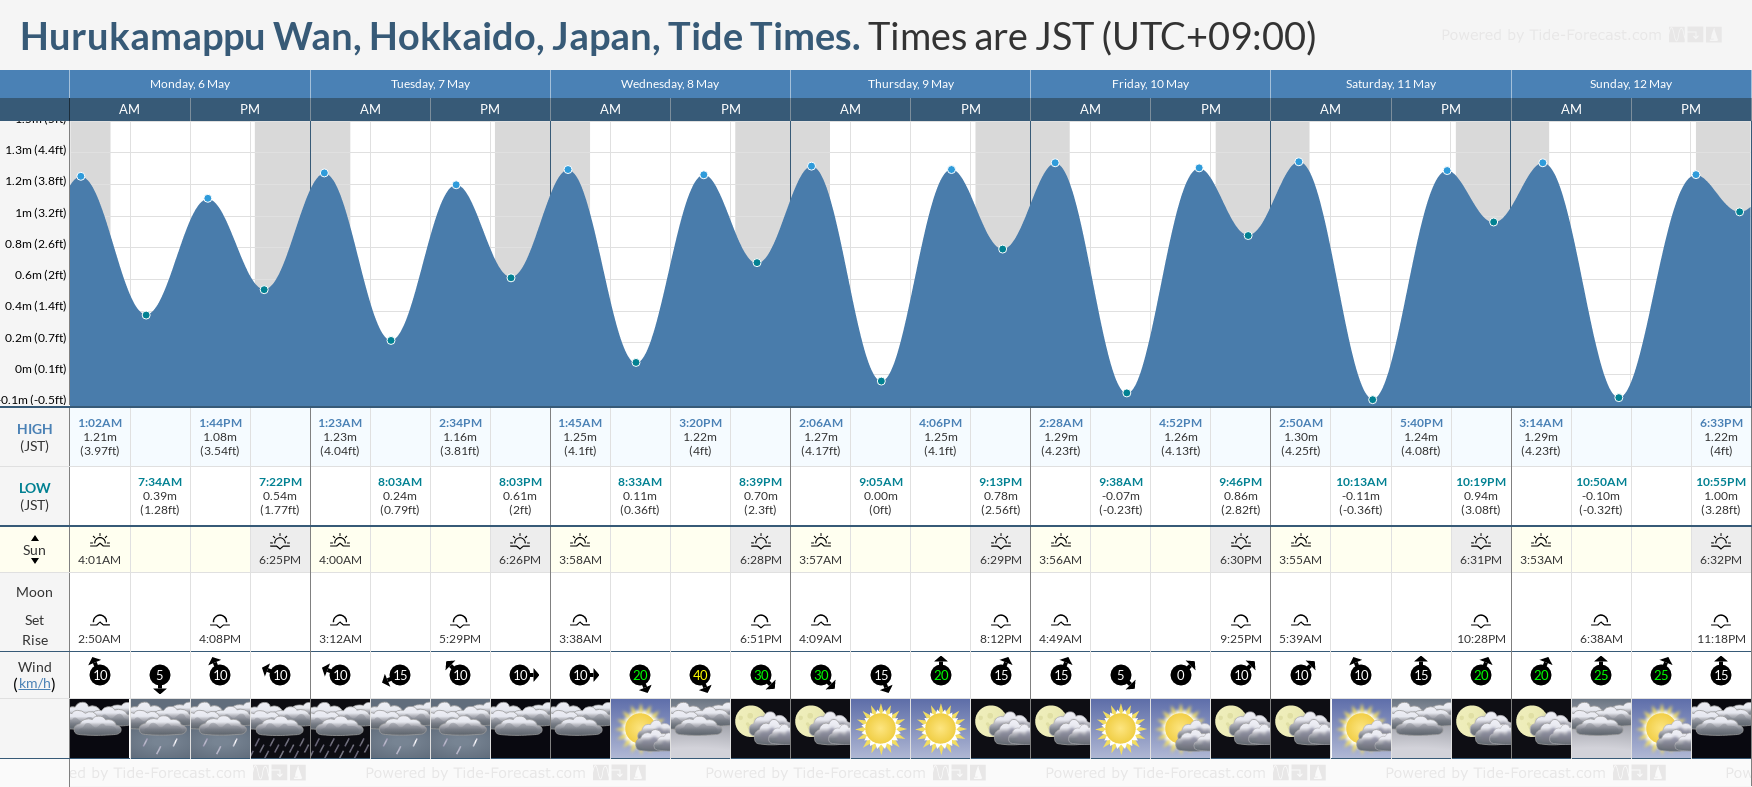 Hurukamappu Wan, Hokkaido, Japan Tide Chart including high and low tide tide times for the next 7 days